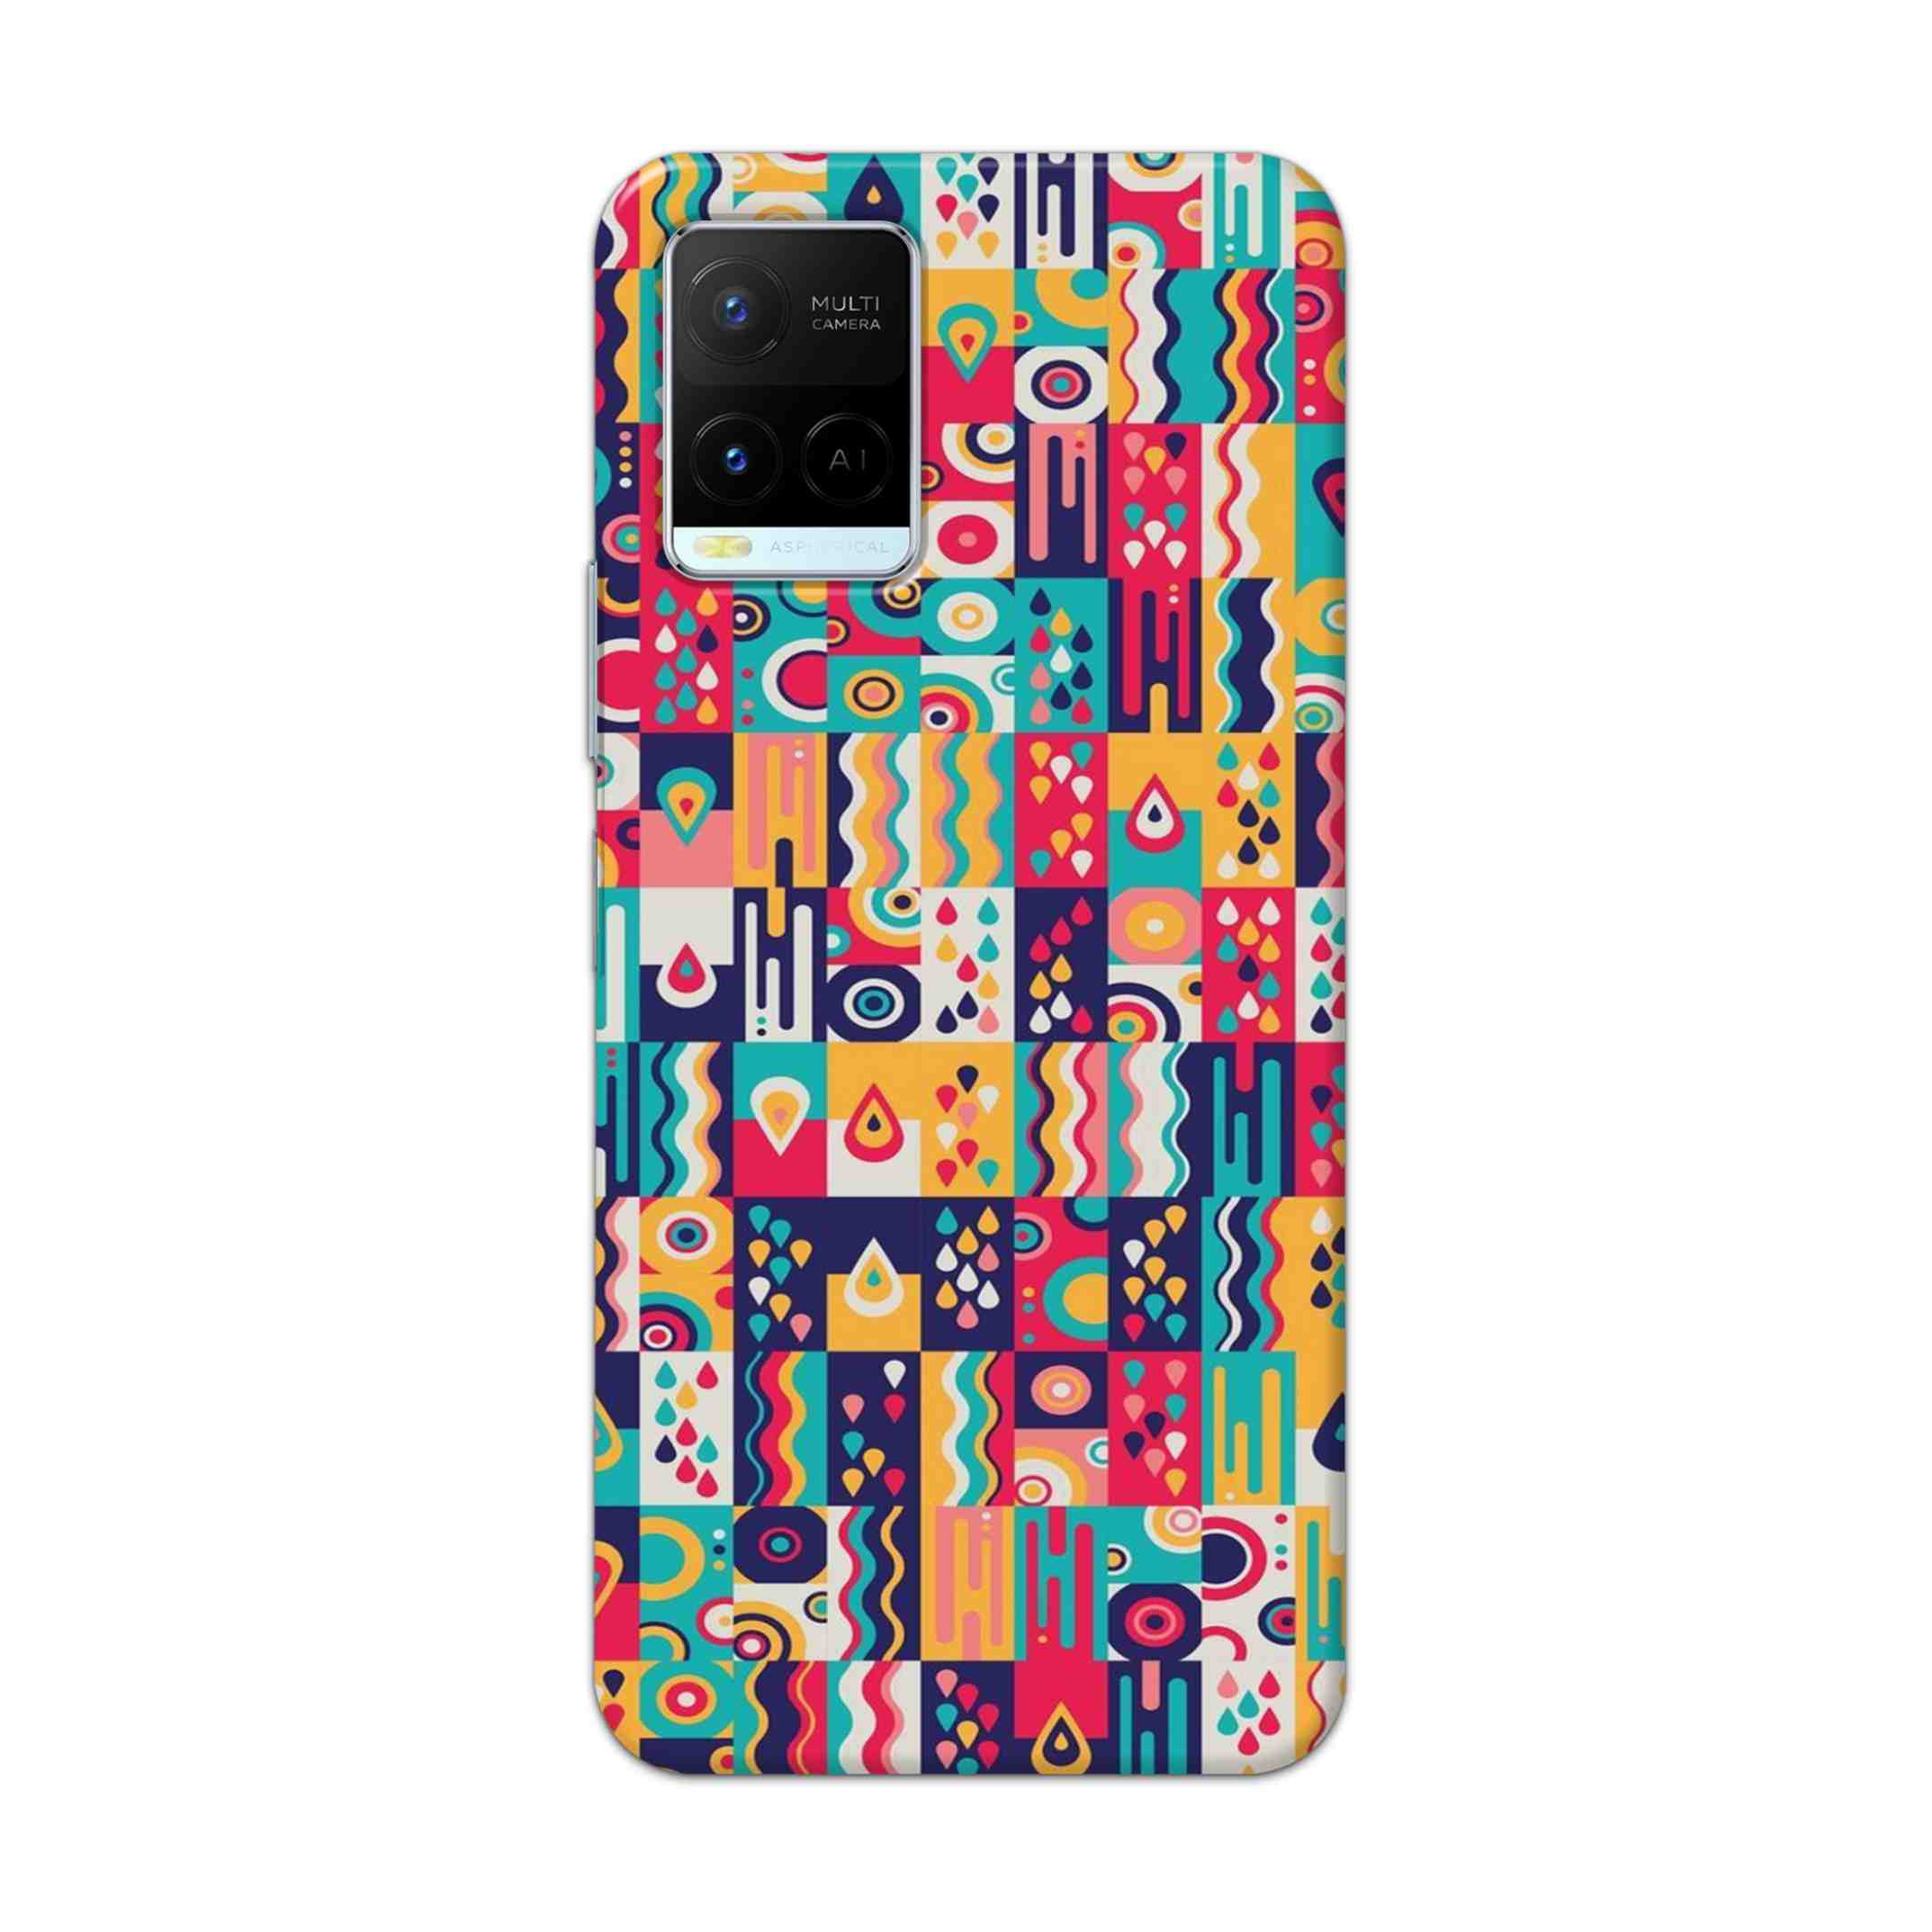 Buy Art Hard Back Mobile Phone Case Cover For Vivo Y21 2021 Online